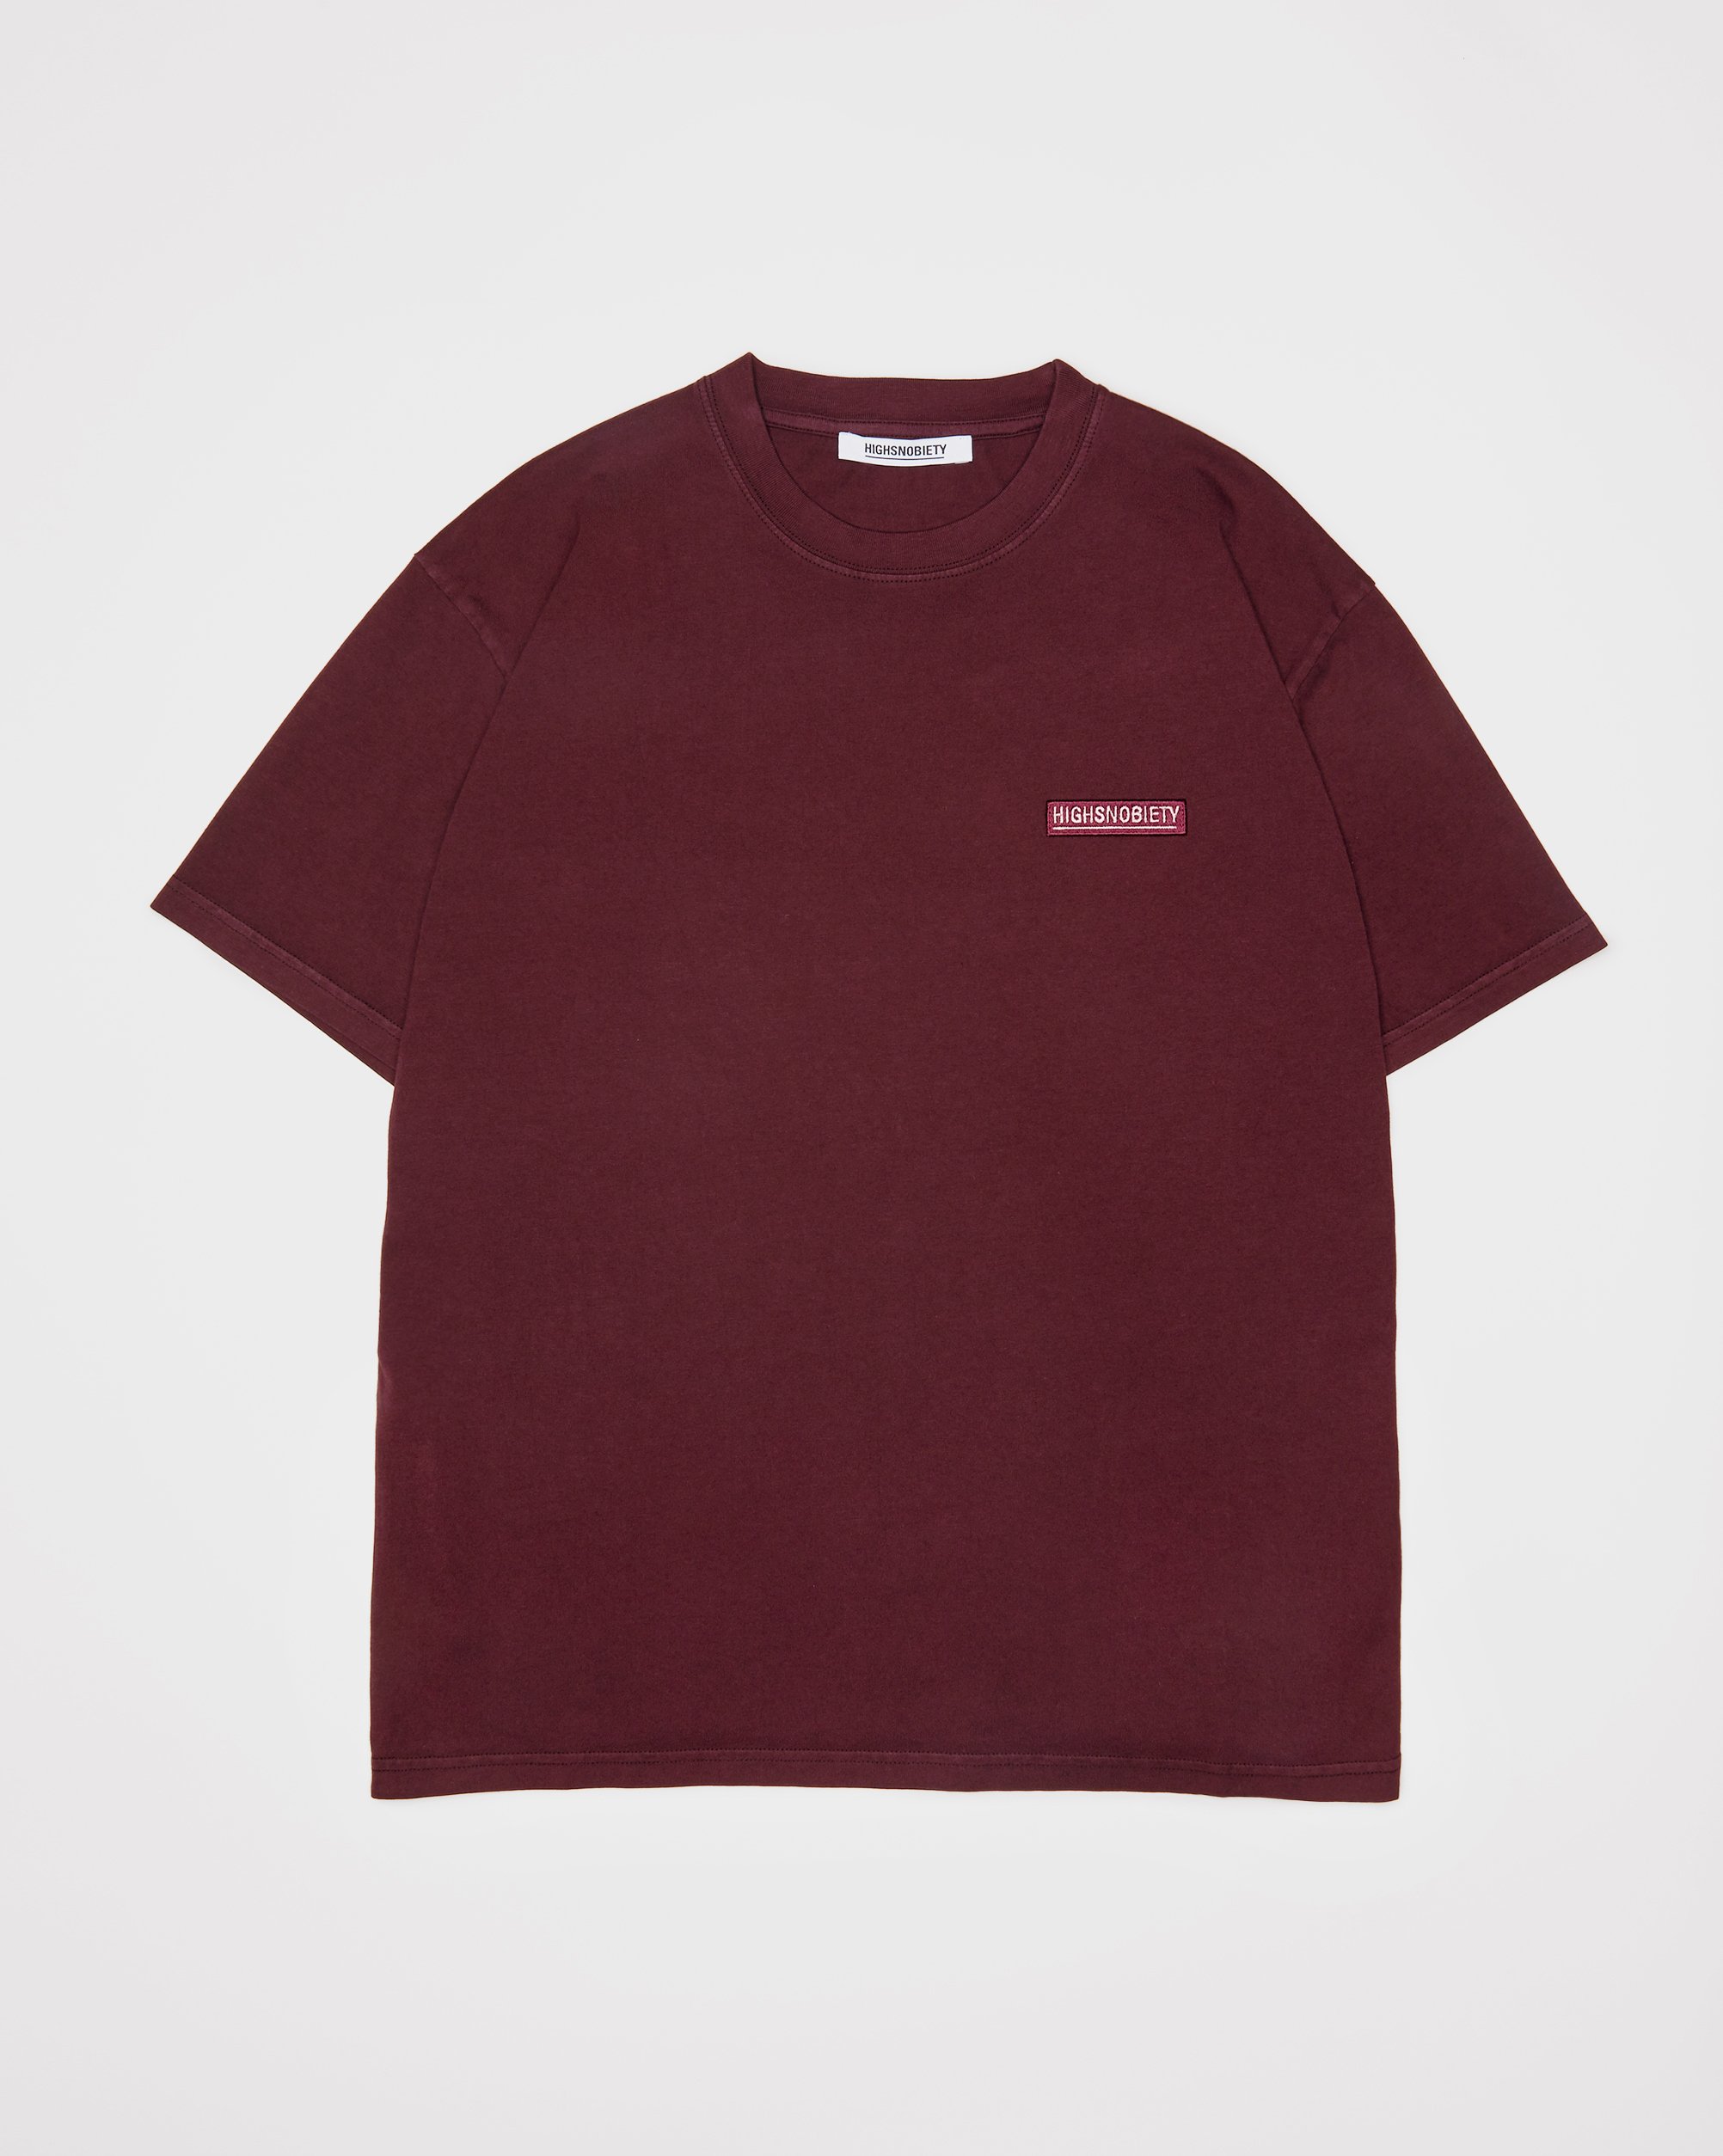 Highsnobiety - Staples T-Shirt Burgundy - Clothing - Red - Image 1